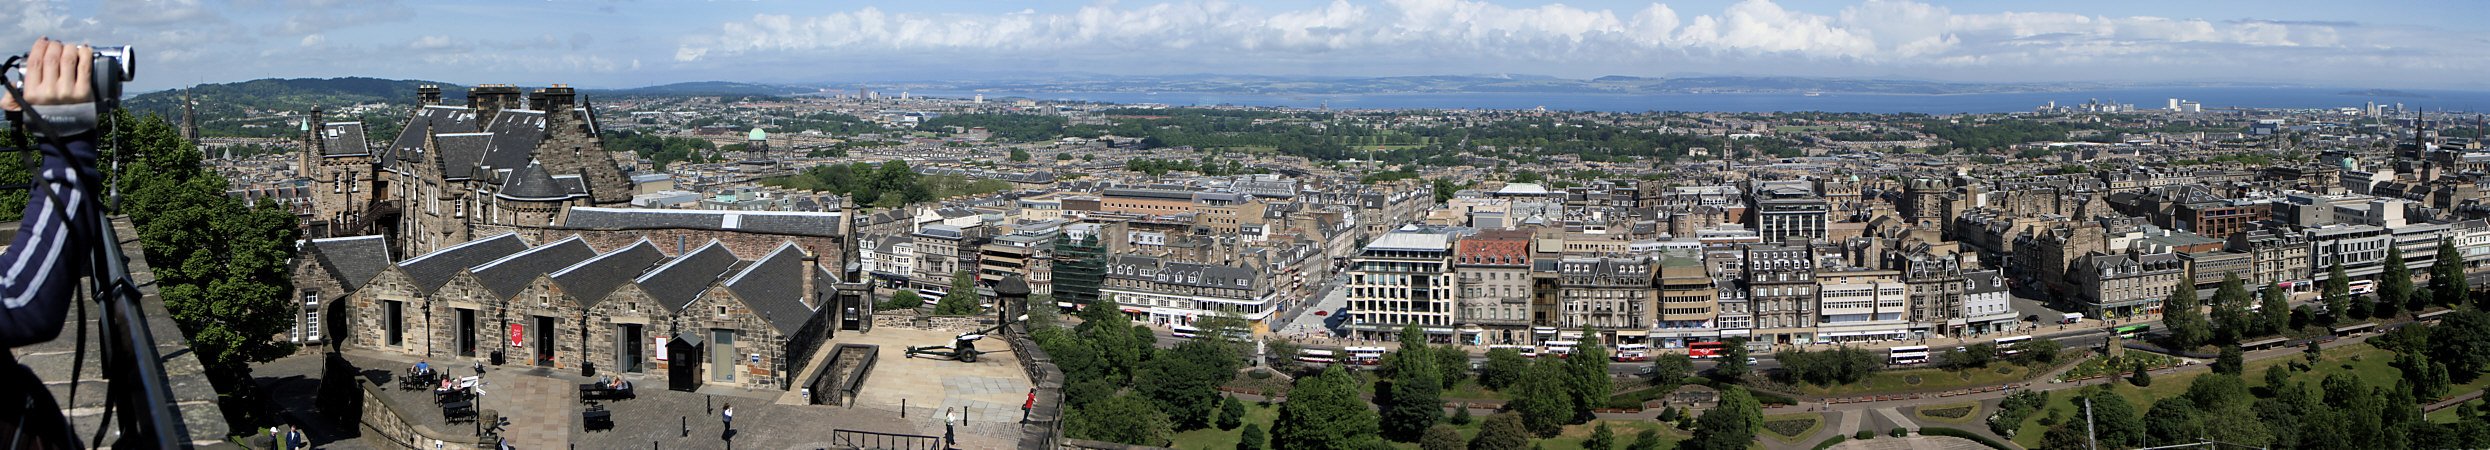 Edinburgh, The Big Panorama